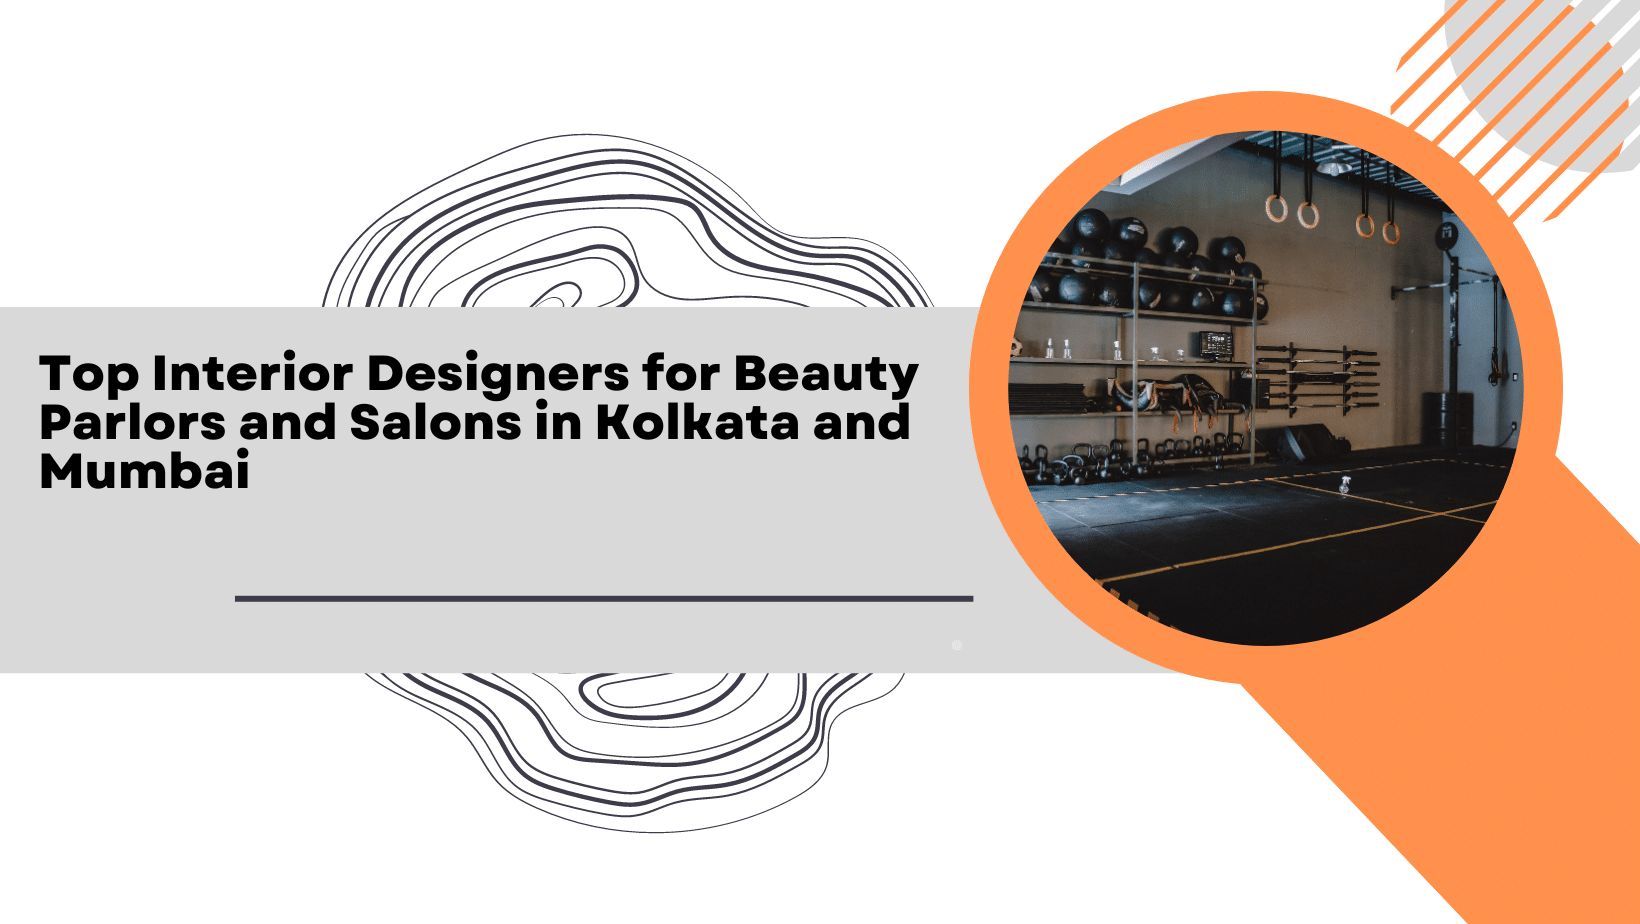 Top Interior Designers for Beauty Parlors and Salons in Kolkata and Mumbai